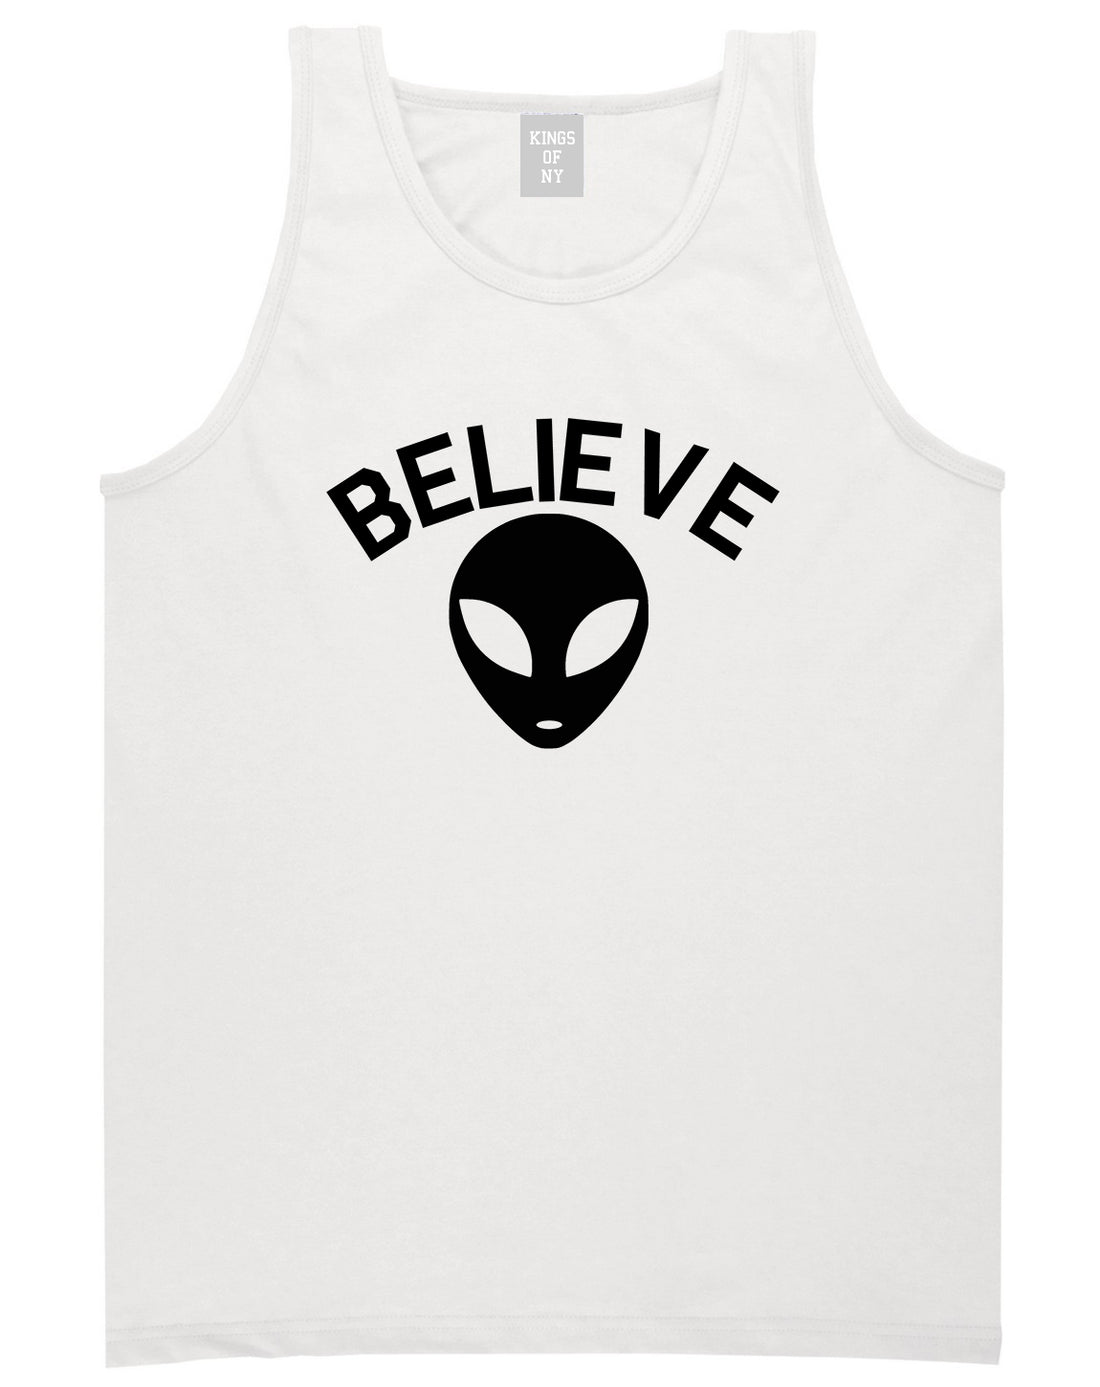 Believe Alien White Tank Top Shirt by Kings Of NY